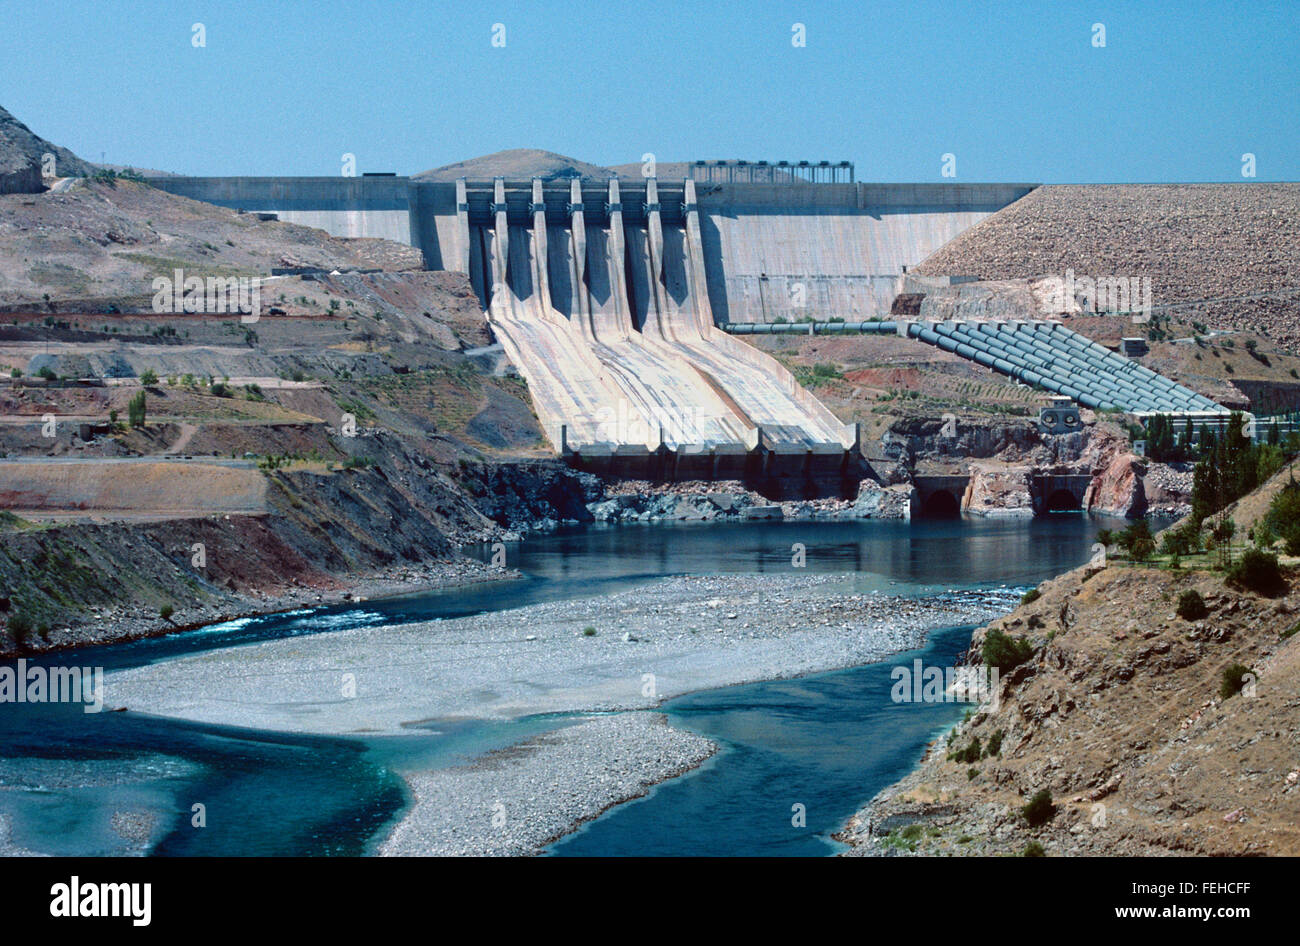 Keban Dam Hydroelectric Dam on the Euphrates River, Elazig, south-east Turkey. Stock Photo